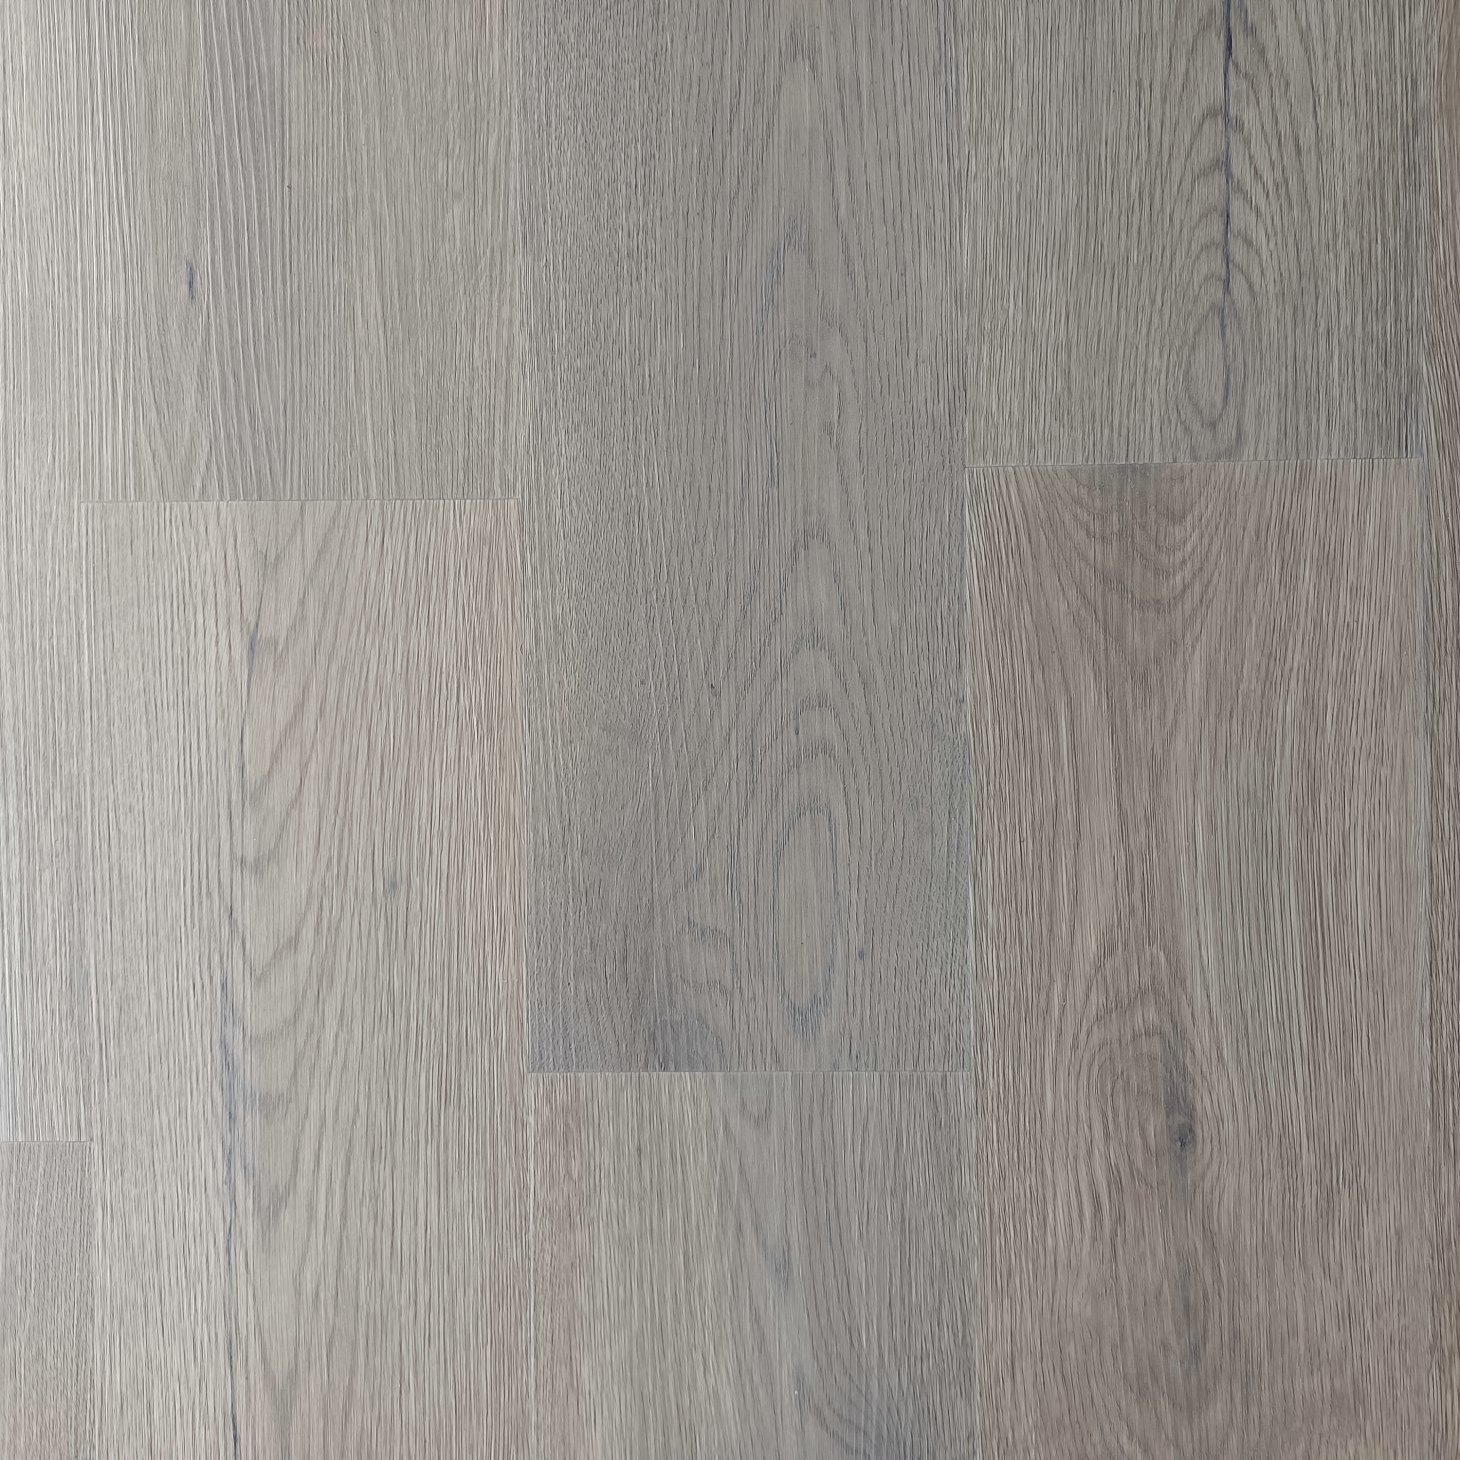 Top Quality High Quality Vinyl Flooring -
 Stable structure ABA luxury rigid spc flooring from Kangton – Kangton